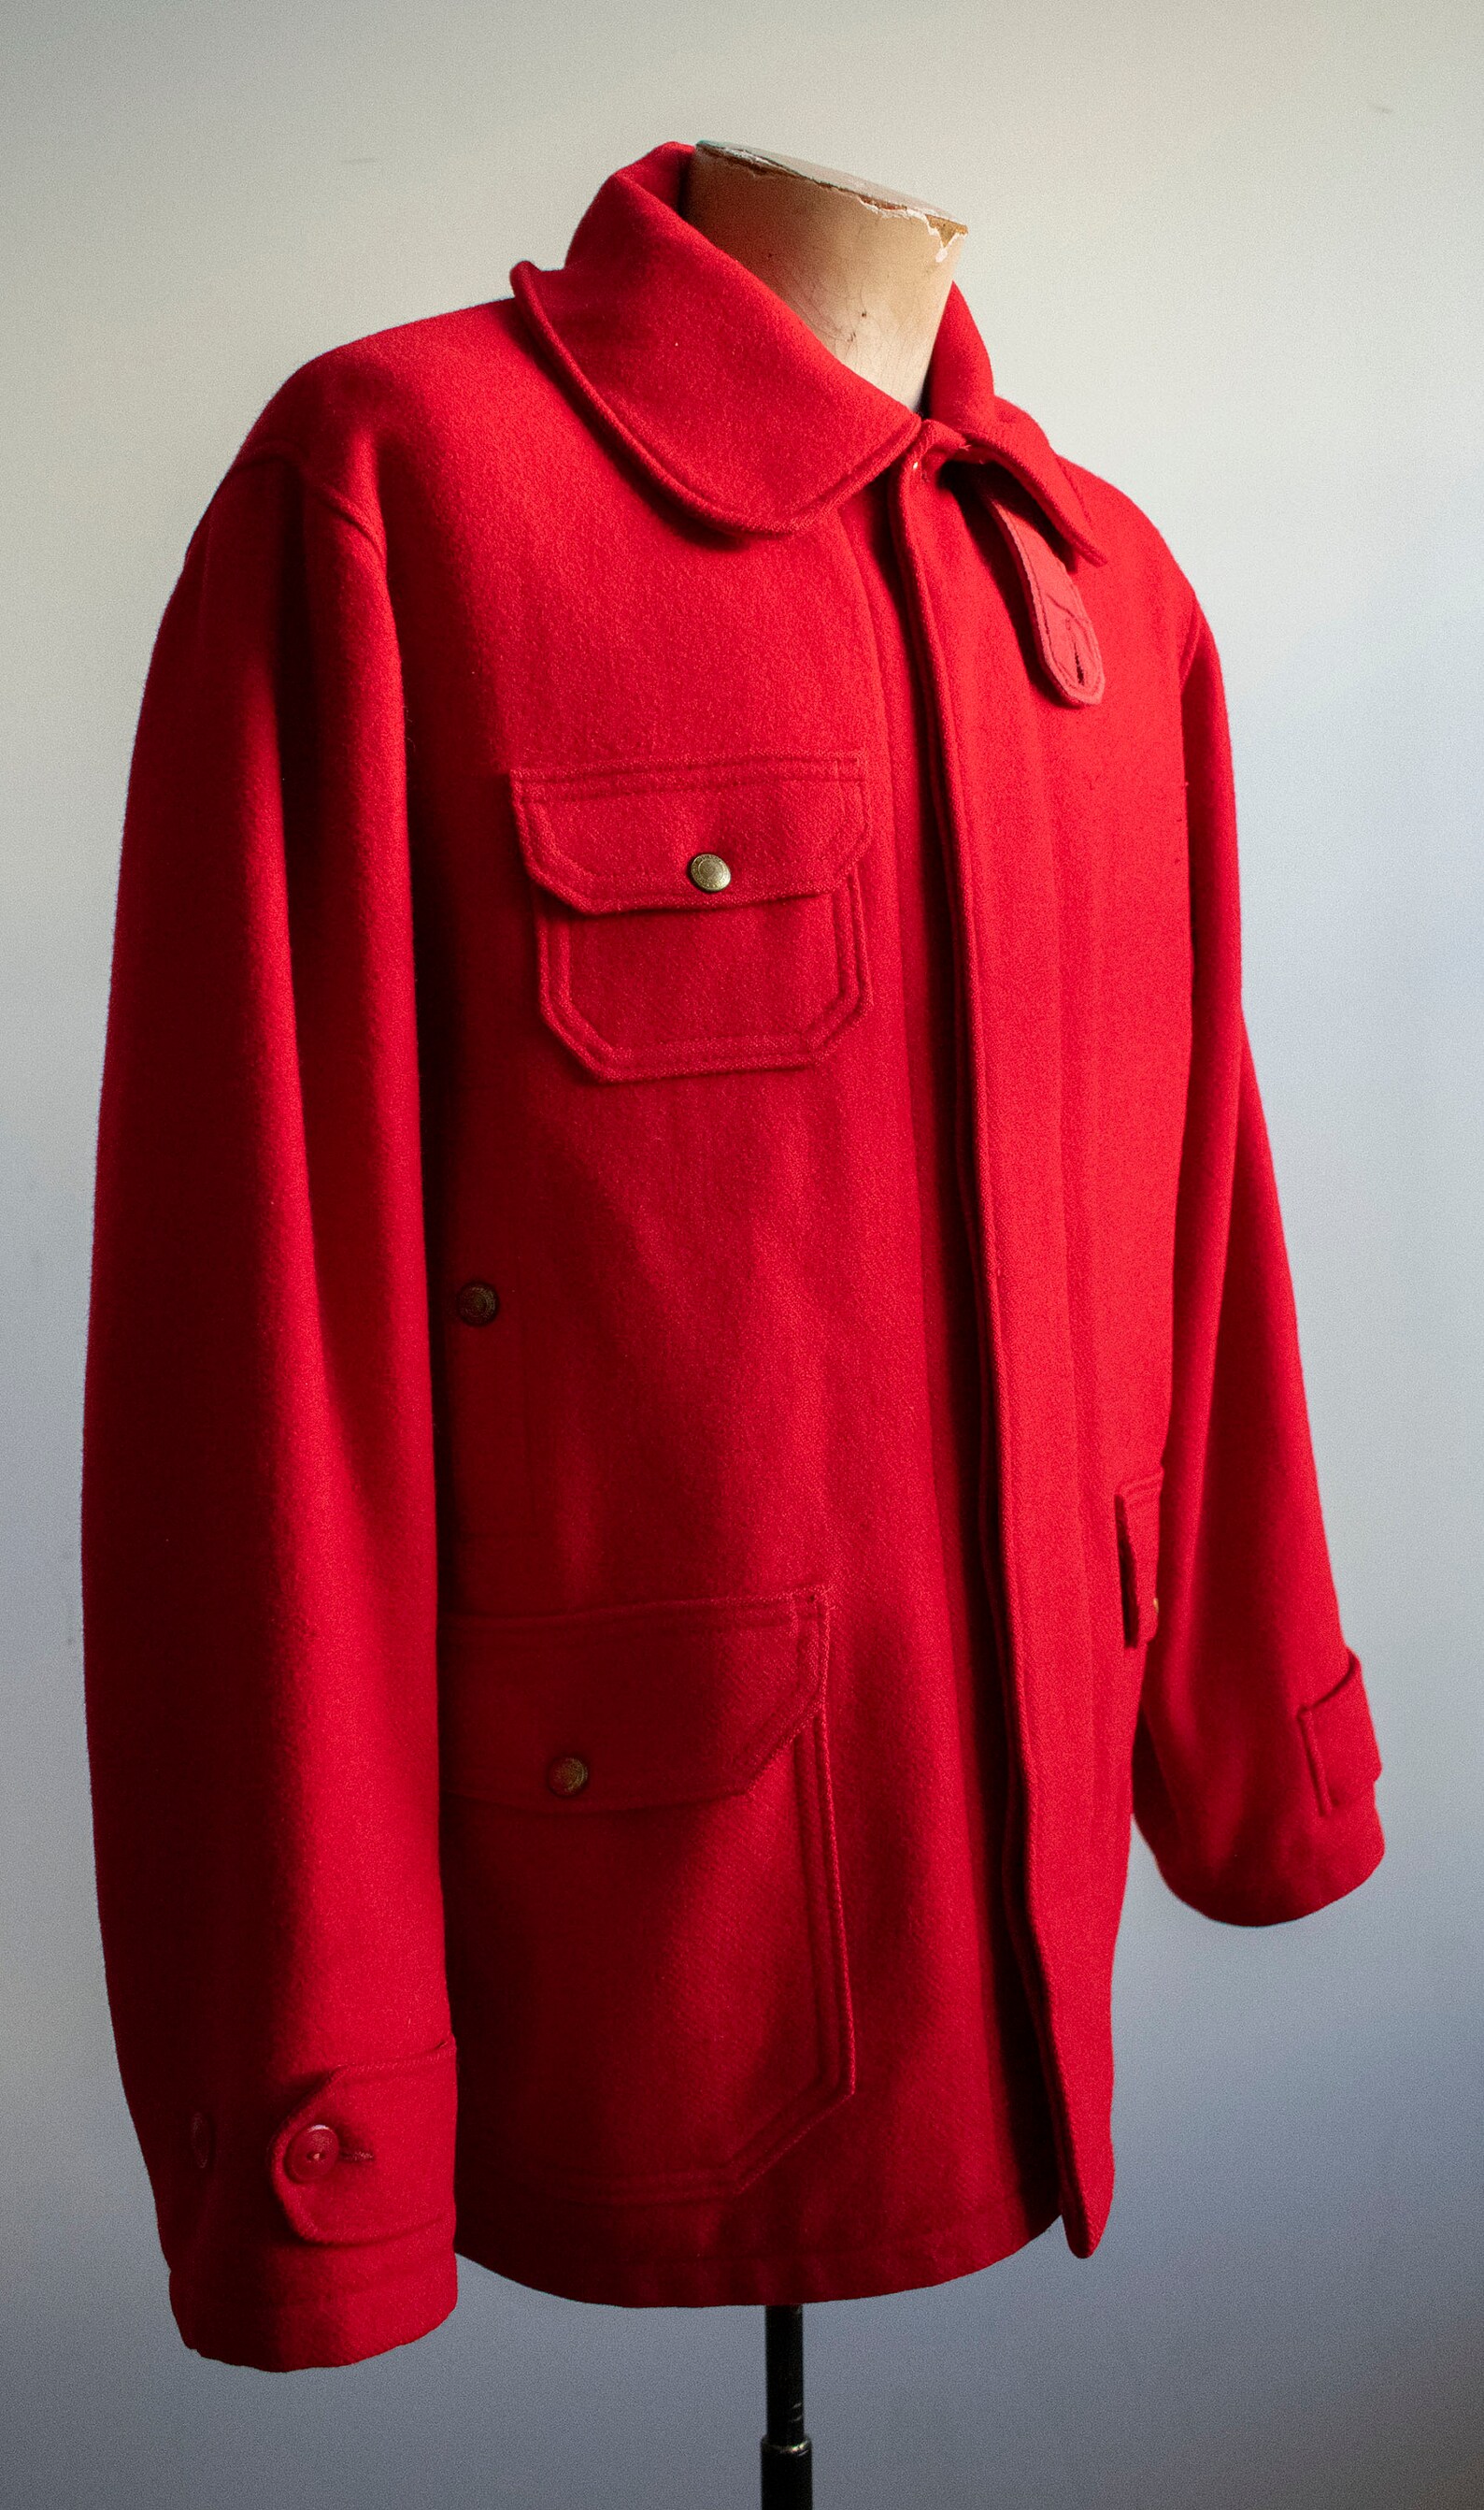 Vintage Woolrich Hunting Jacket / 1950s Woolrich Coat / - Etsy